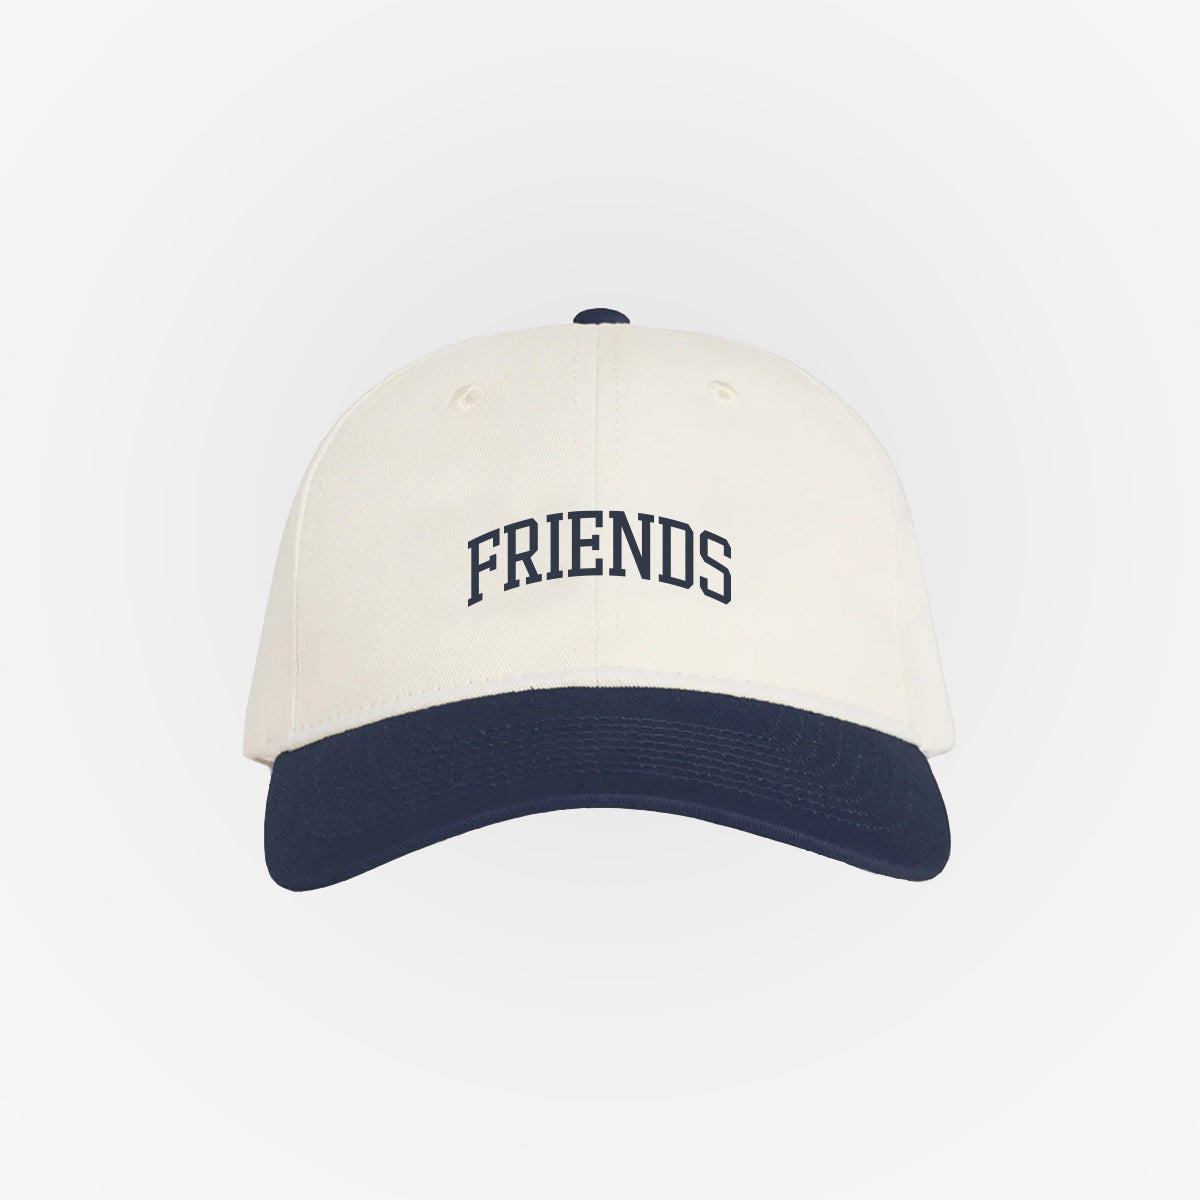 Best Friend Trucker Hat 